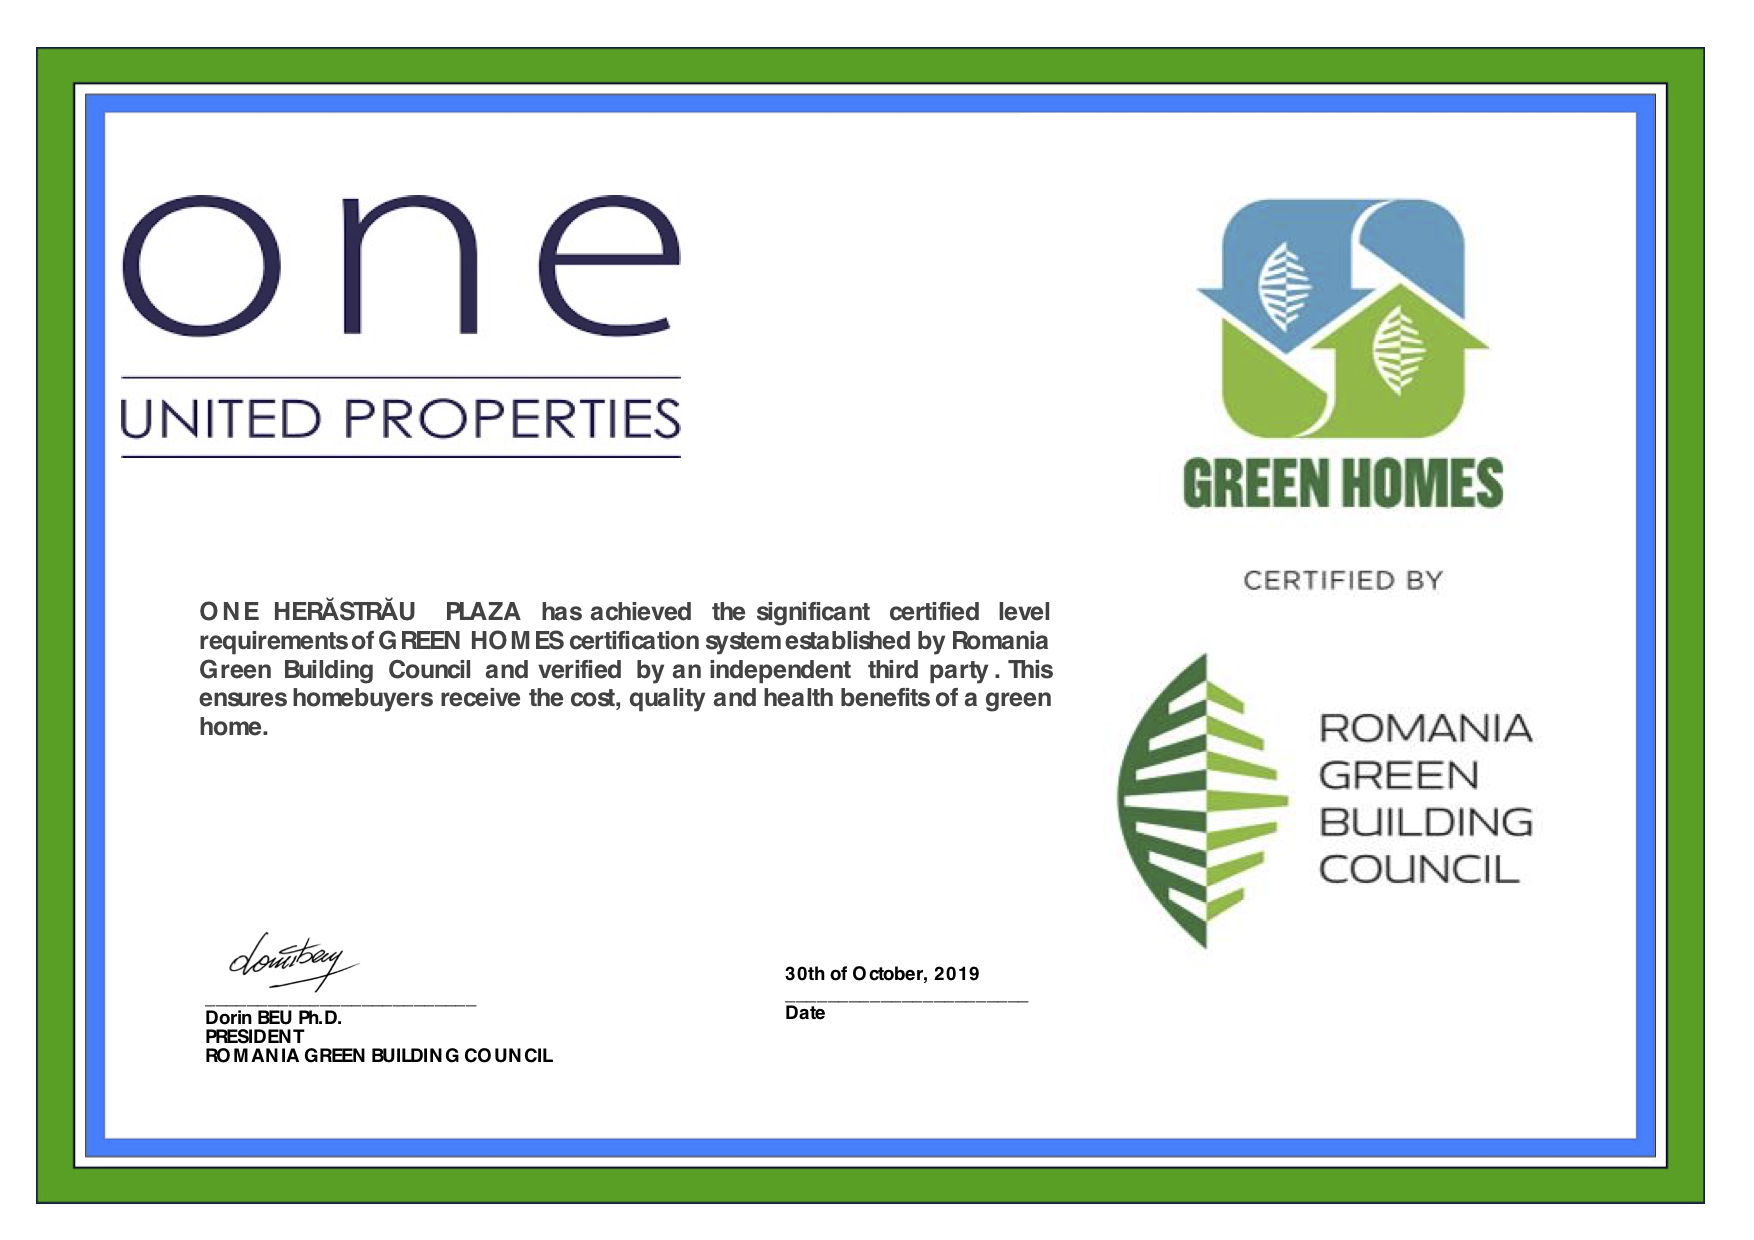 One Herăstrău Plaza has obtained ”Green Homes” certification